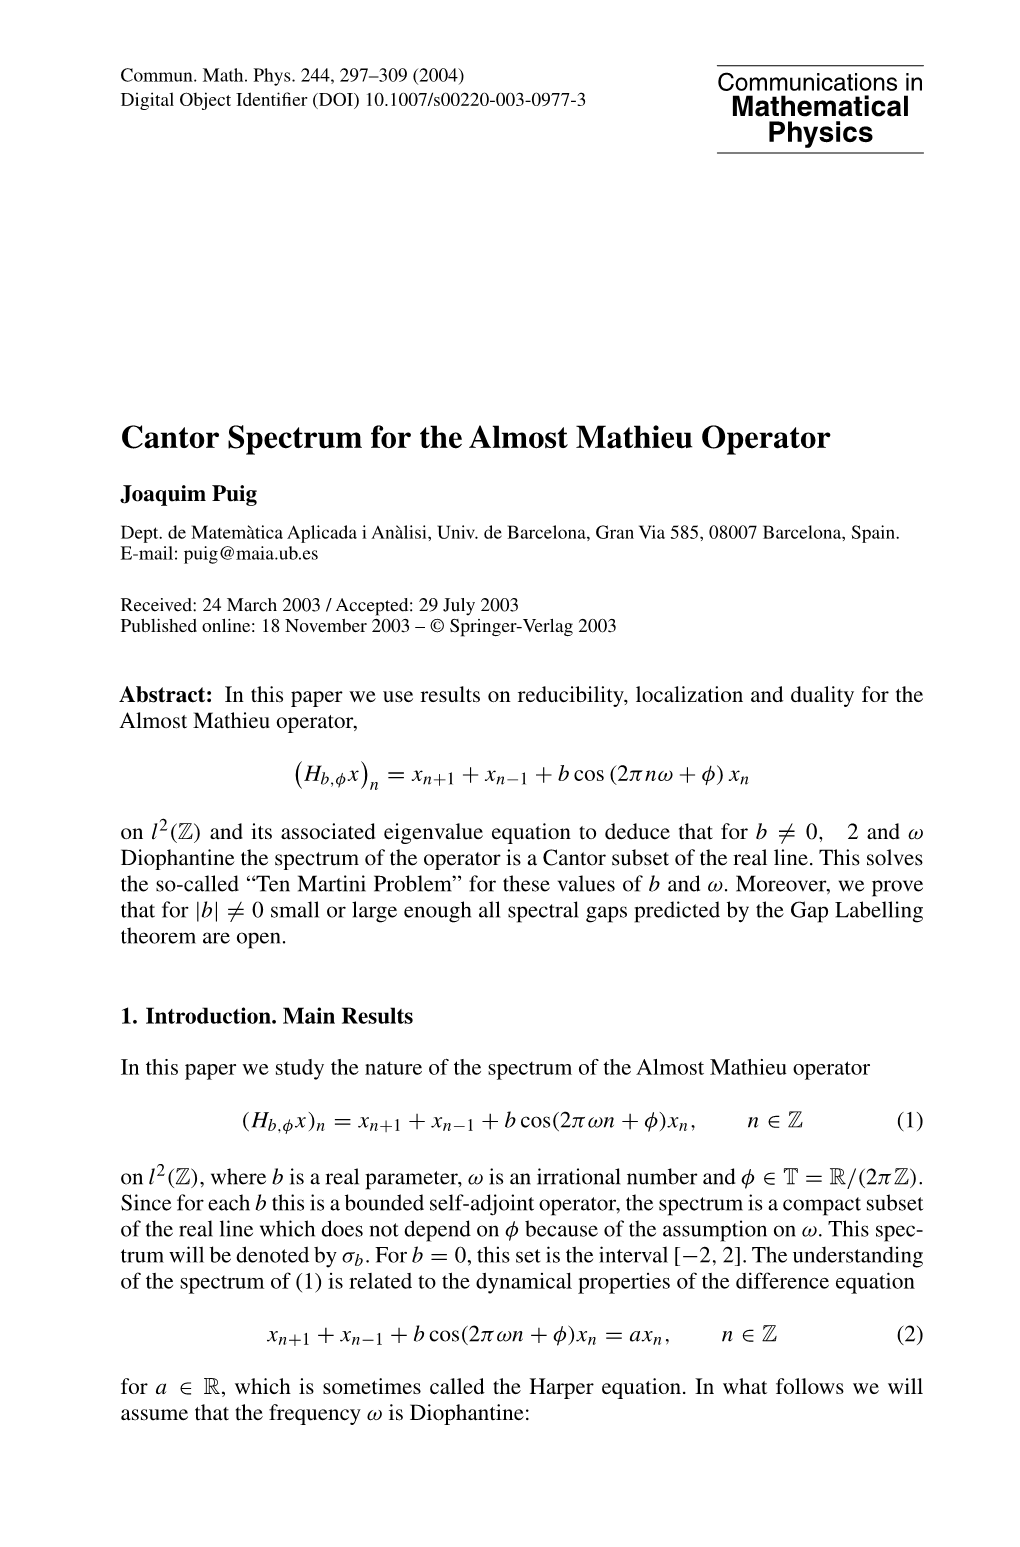 Cantor Spectrum for the Almost Mathieu Operator. Joaquim Puig